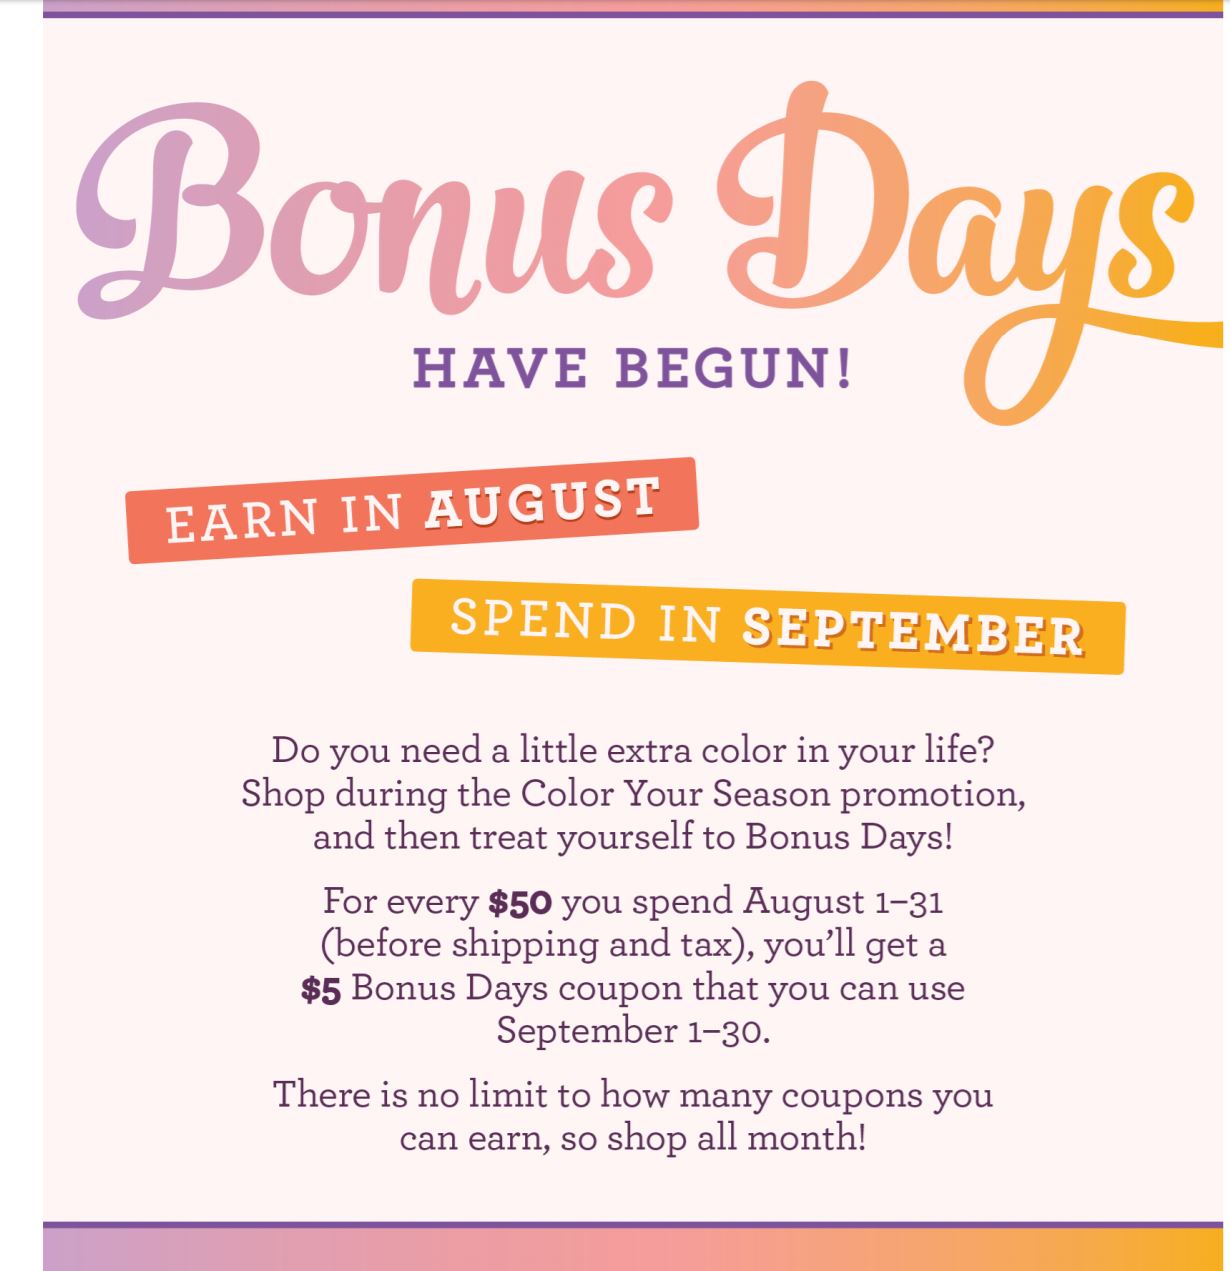 Bonus Days Details - Spend $50, get a coupon for $5 in September